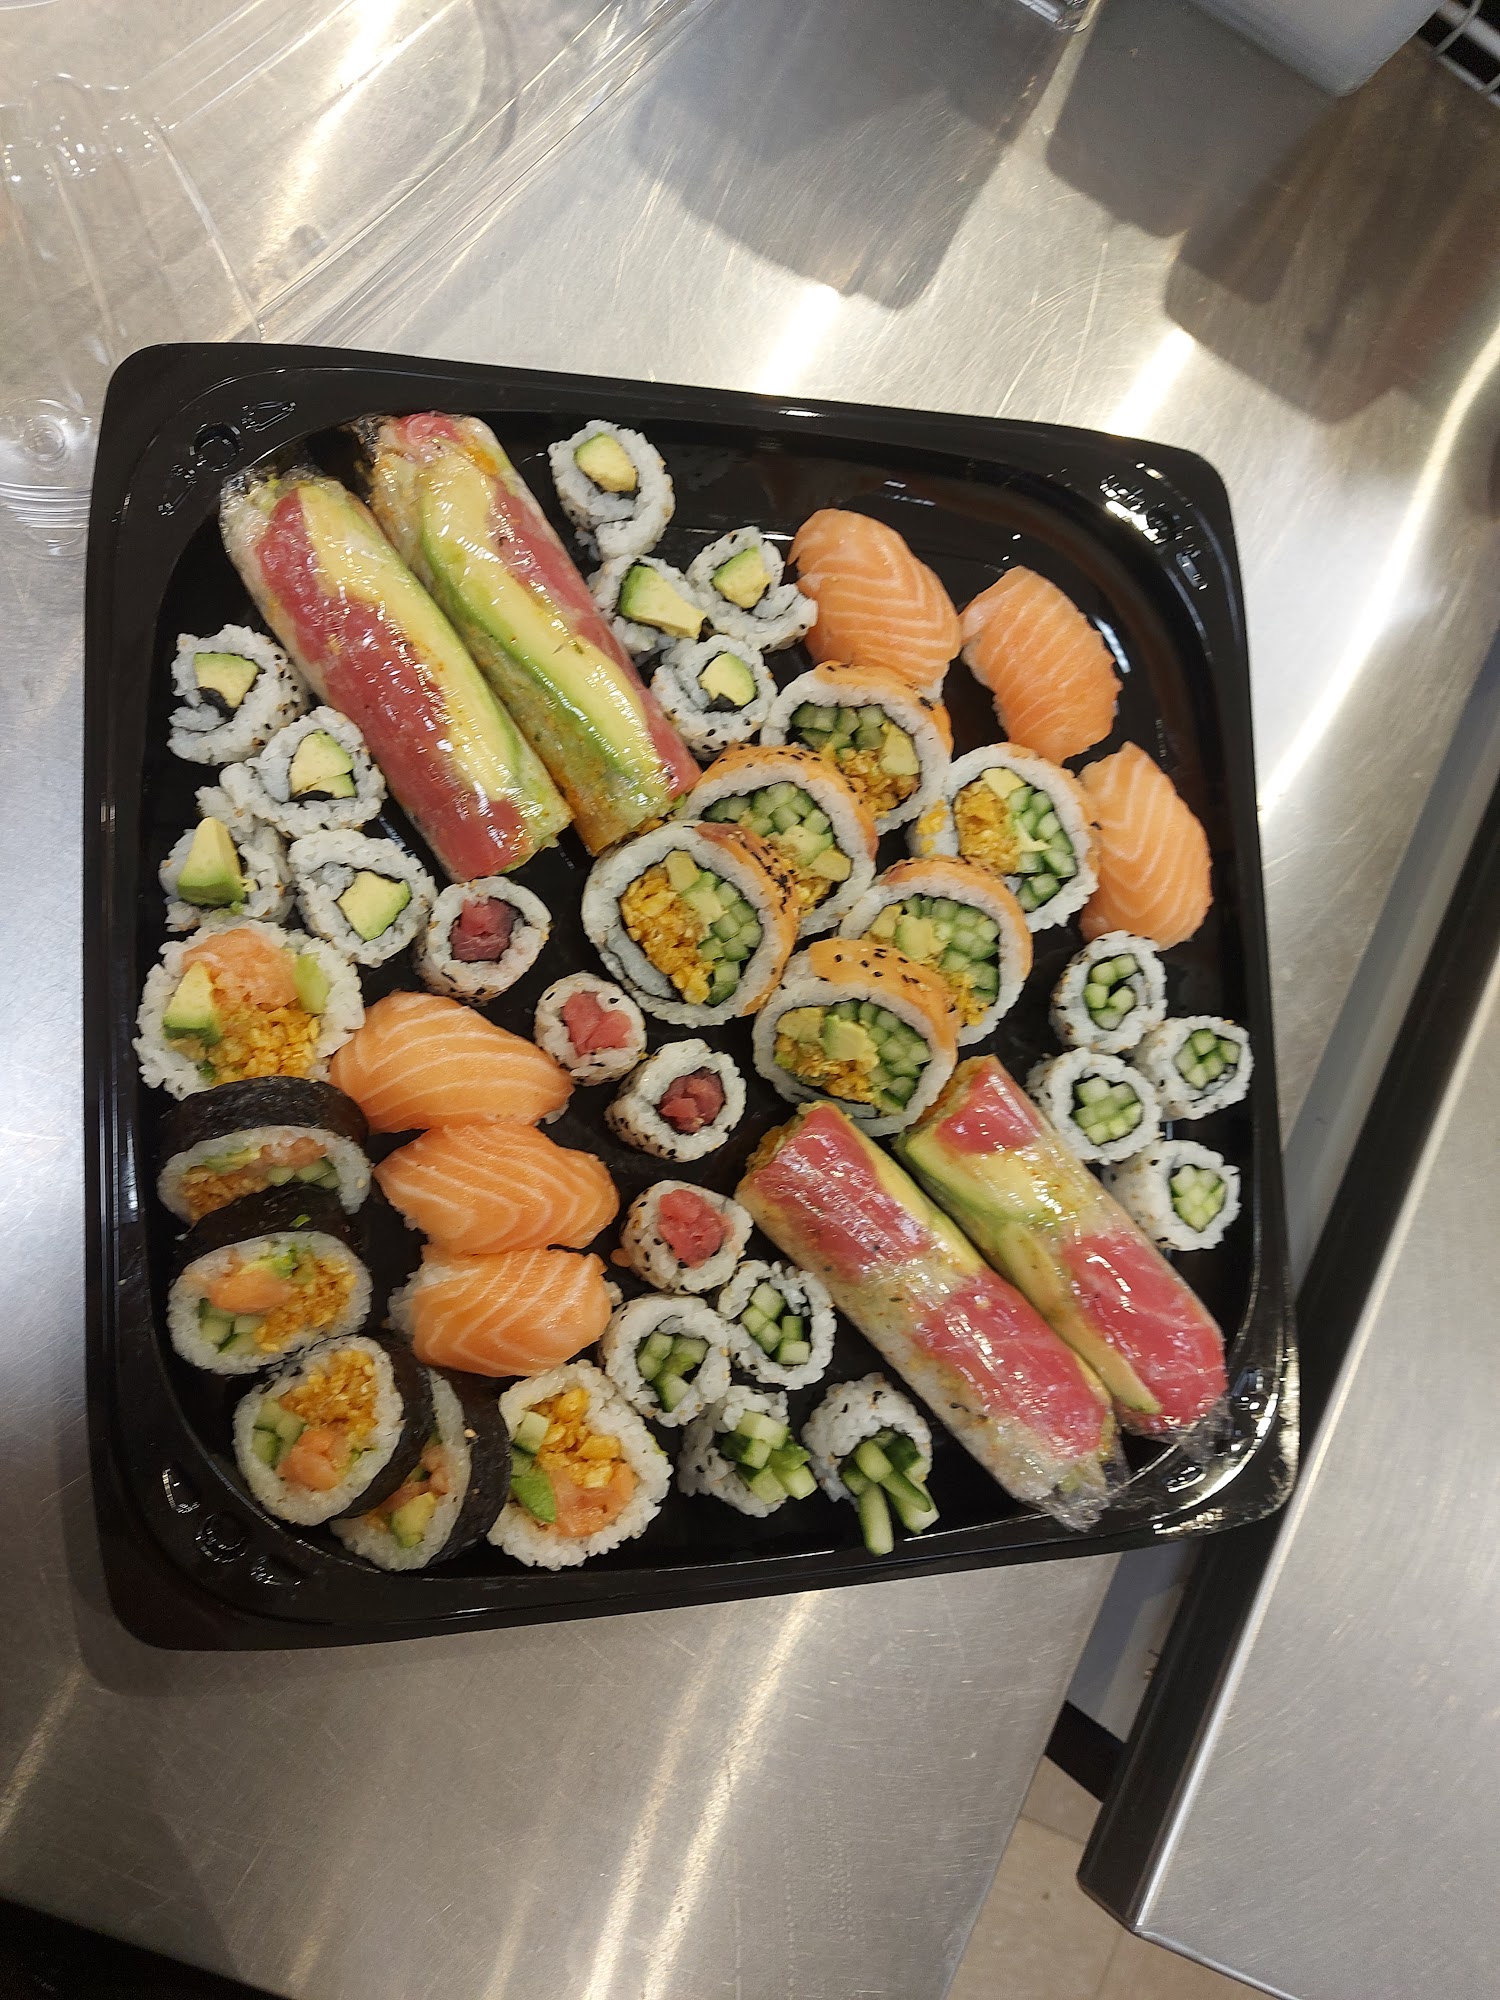 Aki Sushi Joliette